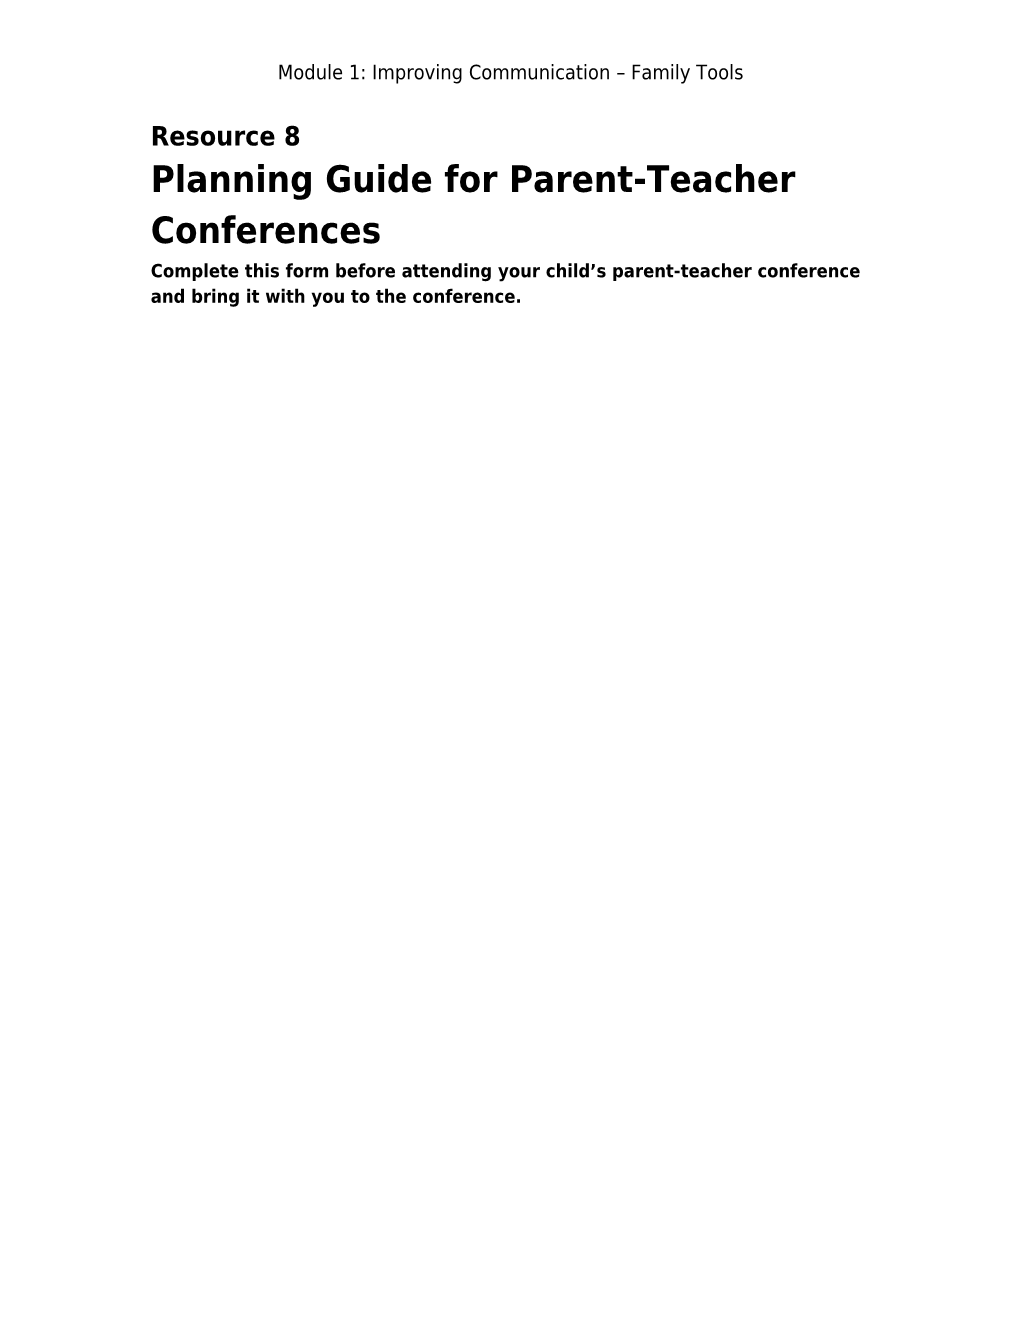 Planning Guide for Parent-Teacher Conferences